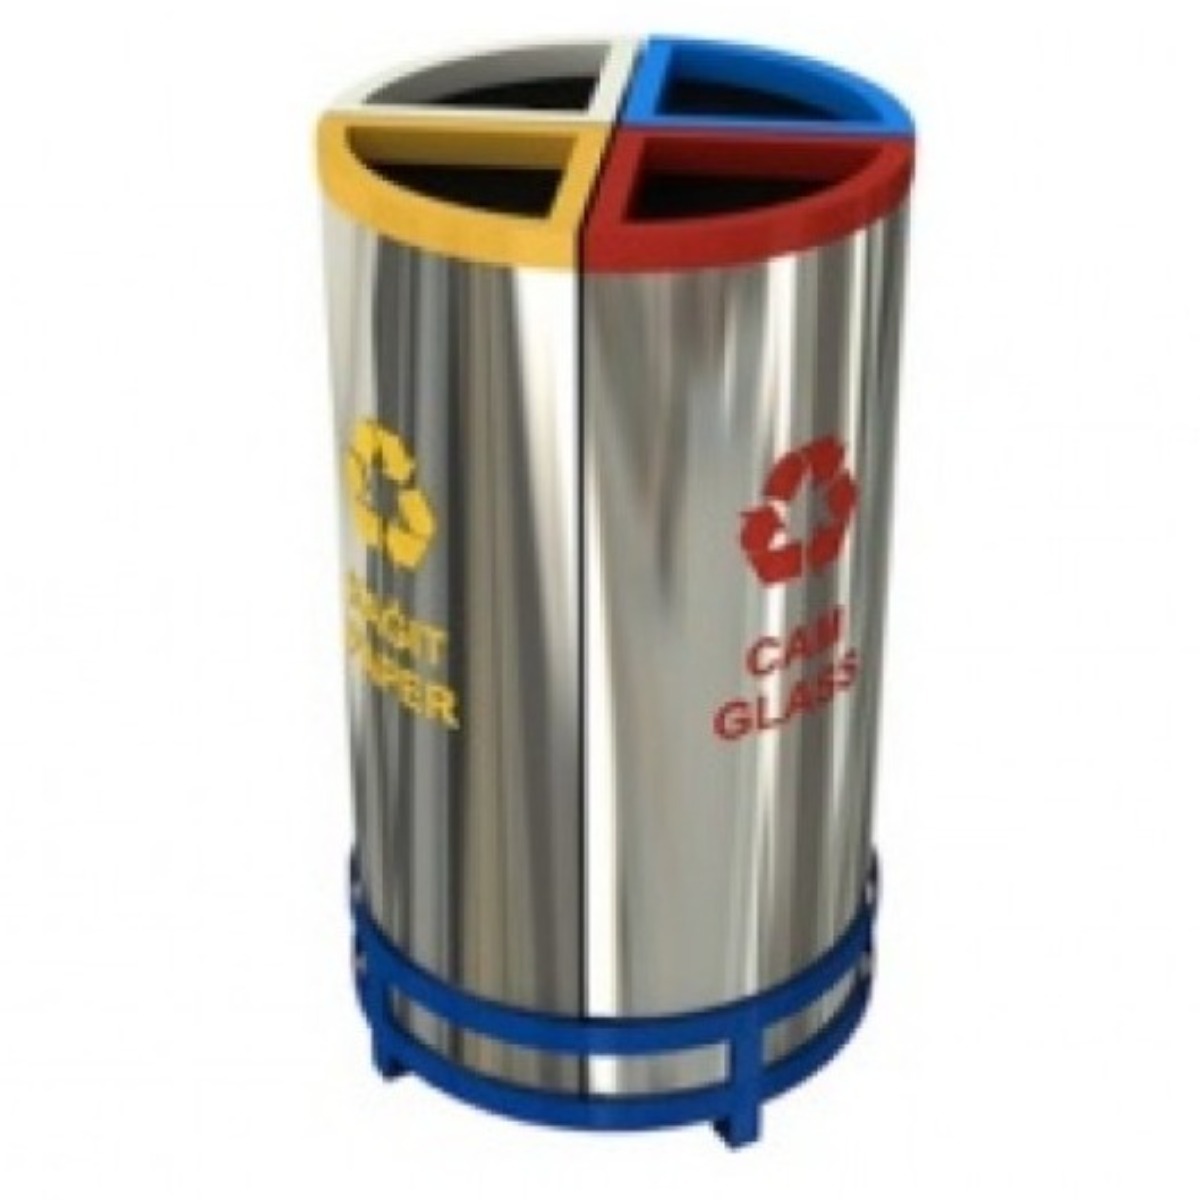 AB-781 Recycle Bin product logo